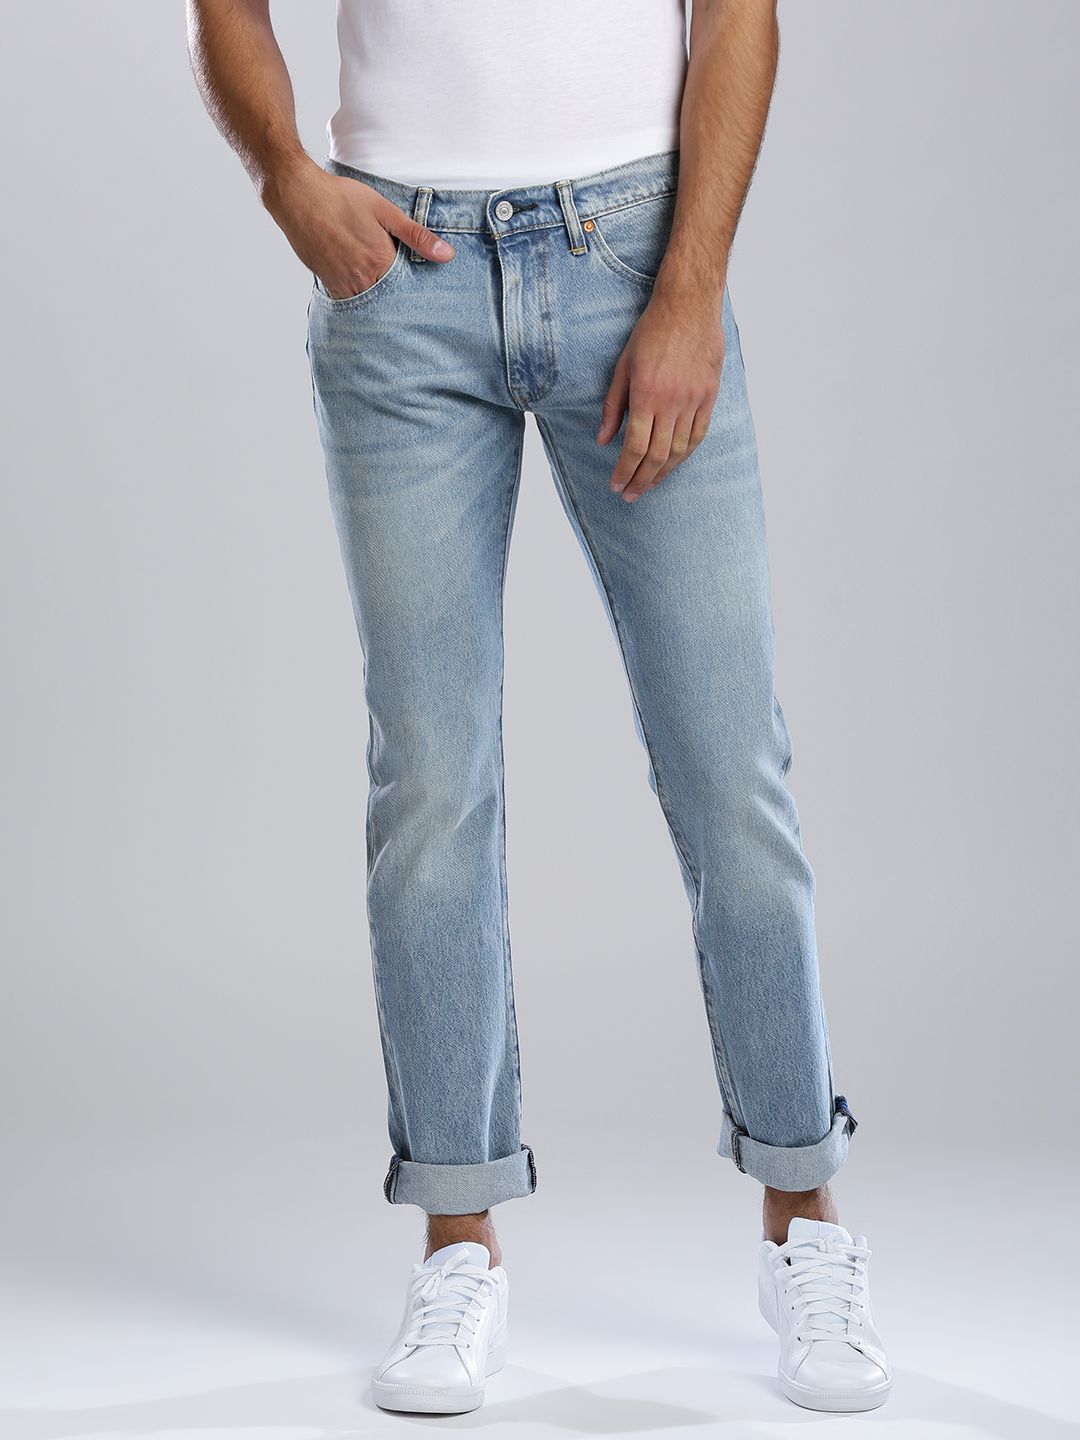 Levis 531 Blue Regular Fit Jeans for men price - Best buy price in ...